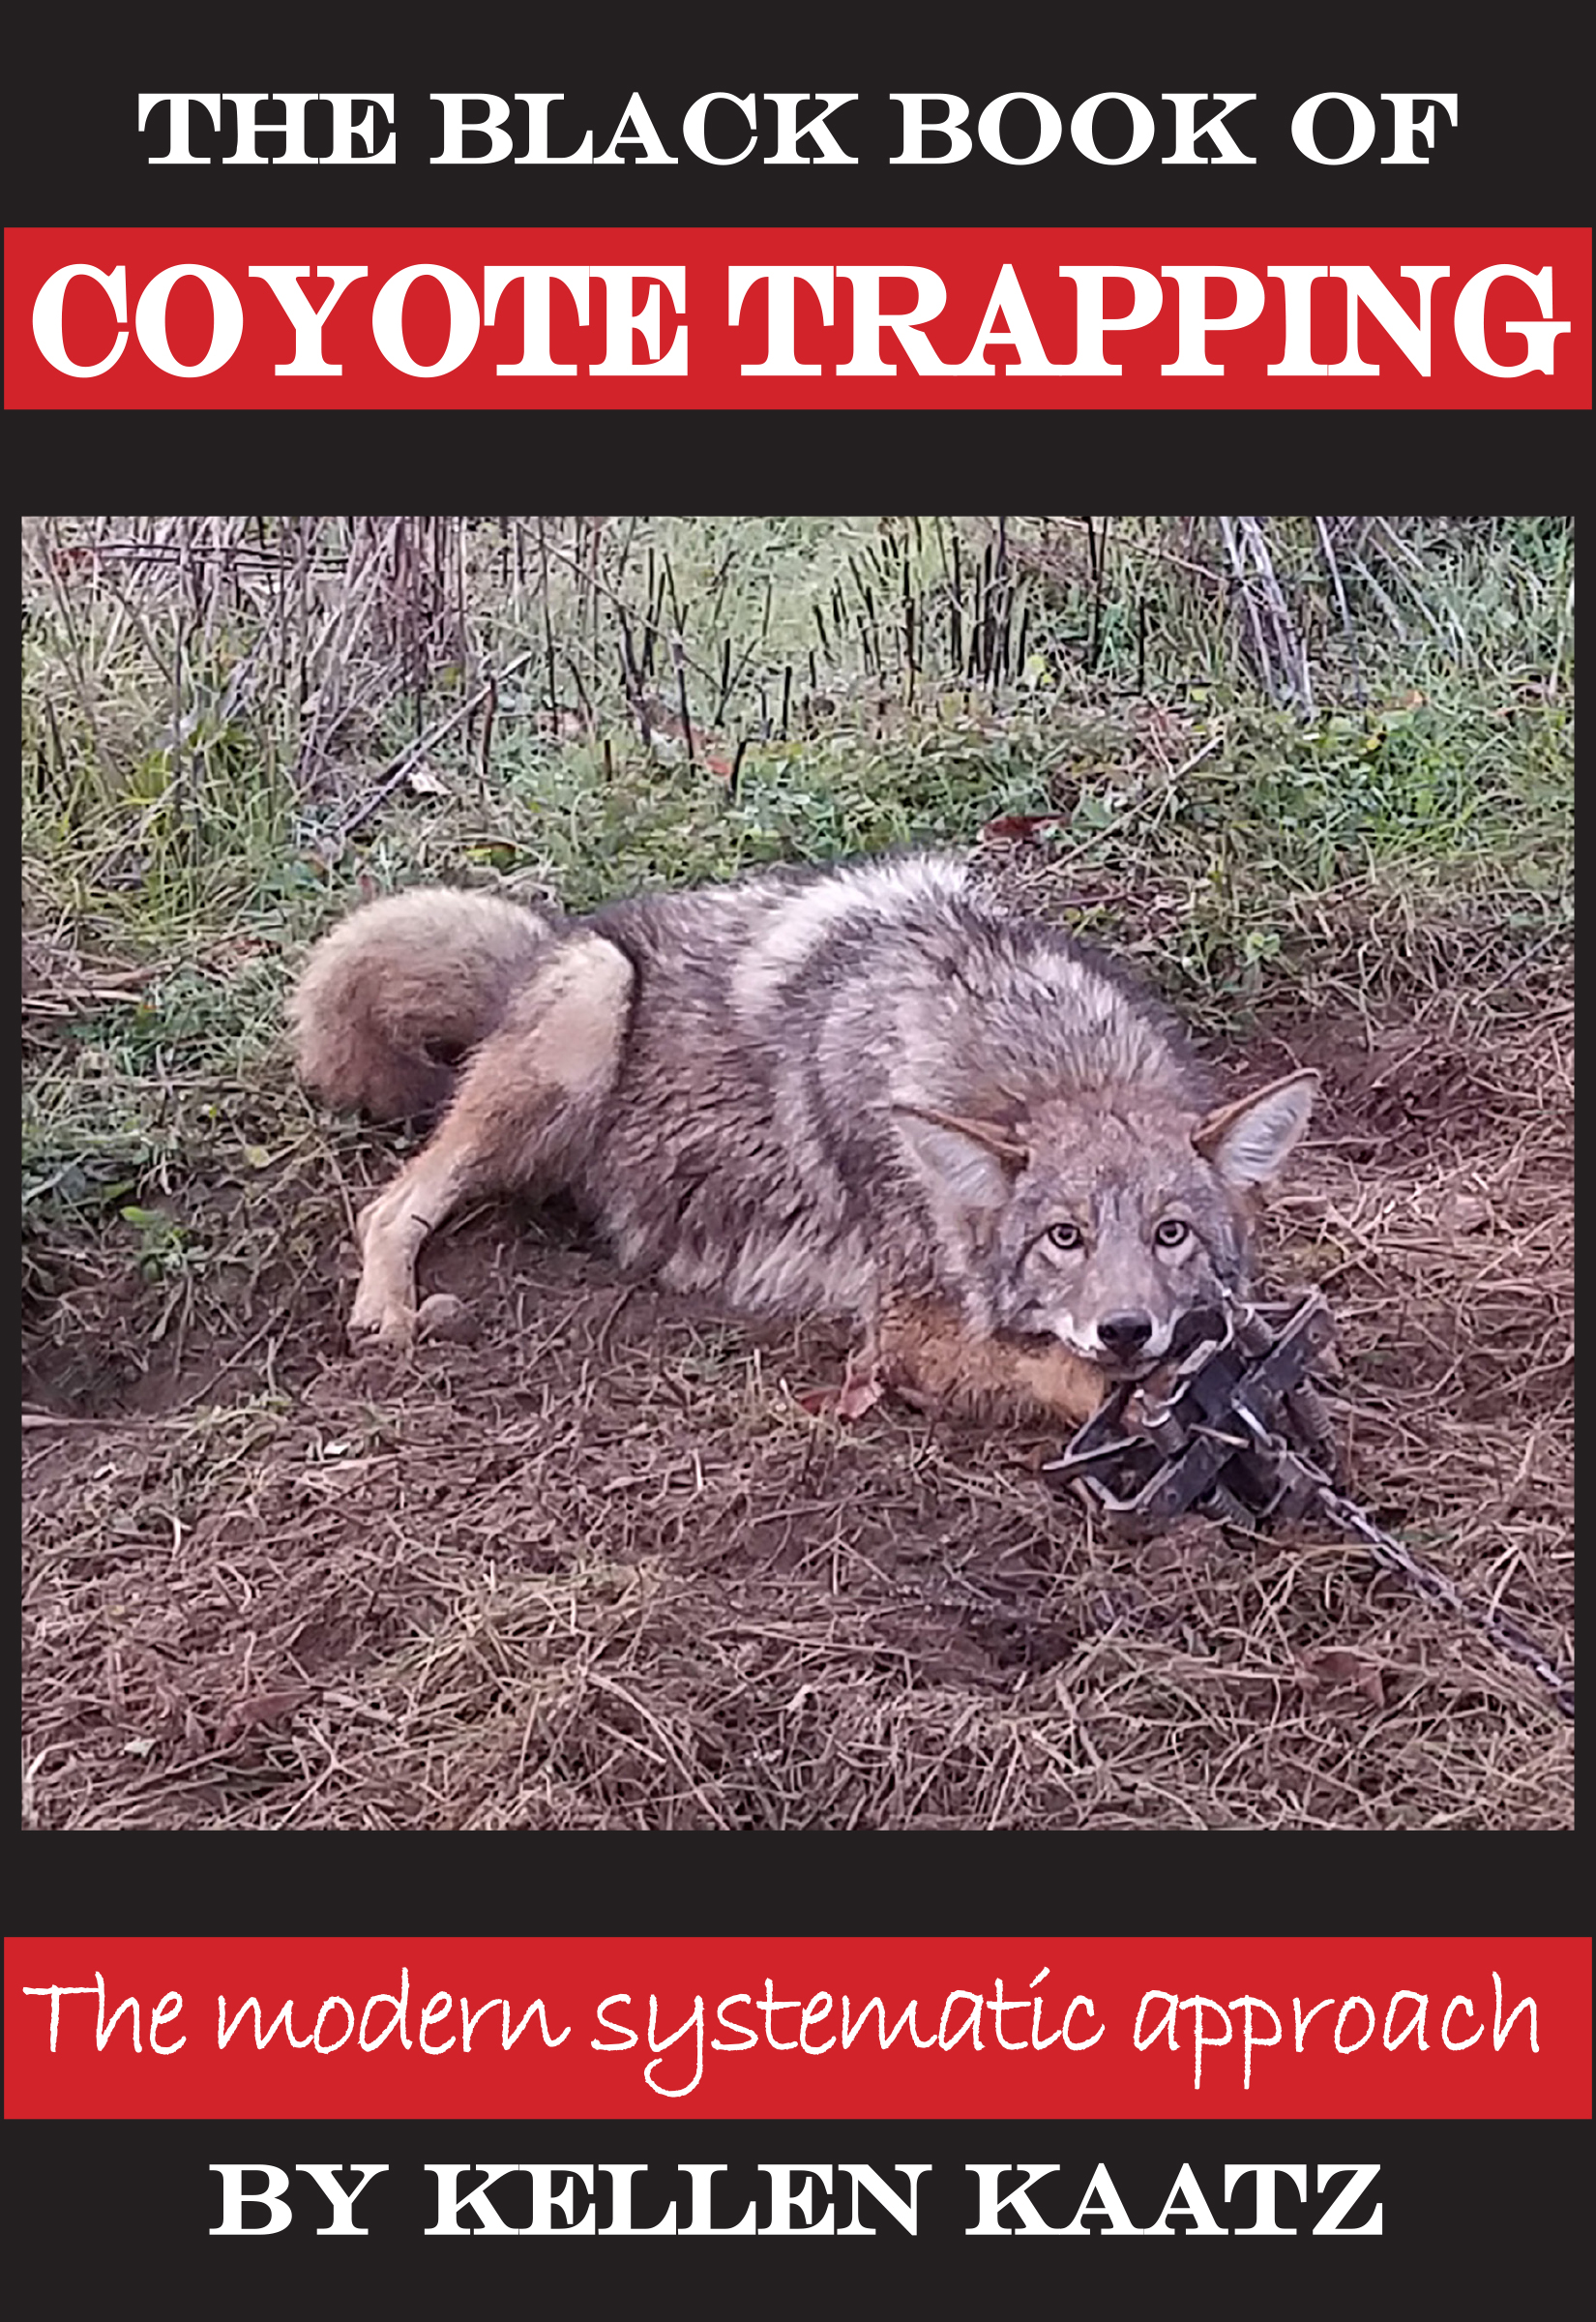 The Black Book of Coyote Trapping - Kellen Kaatz